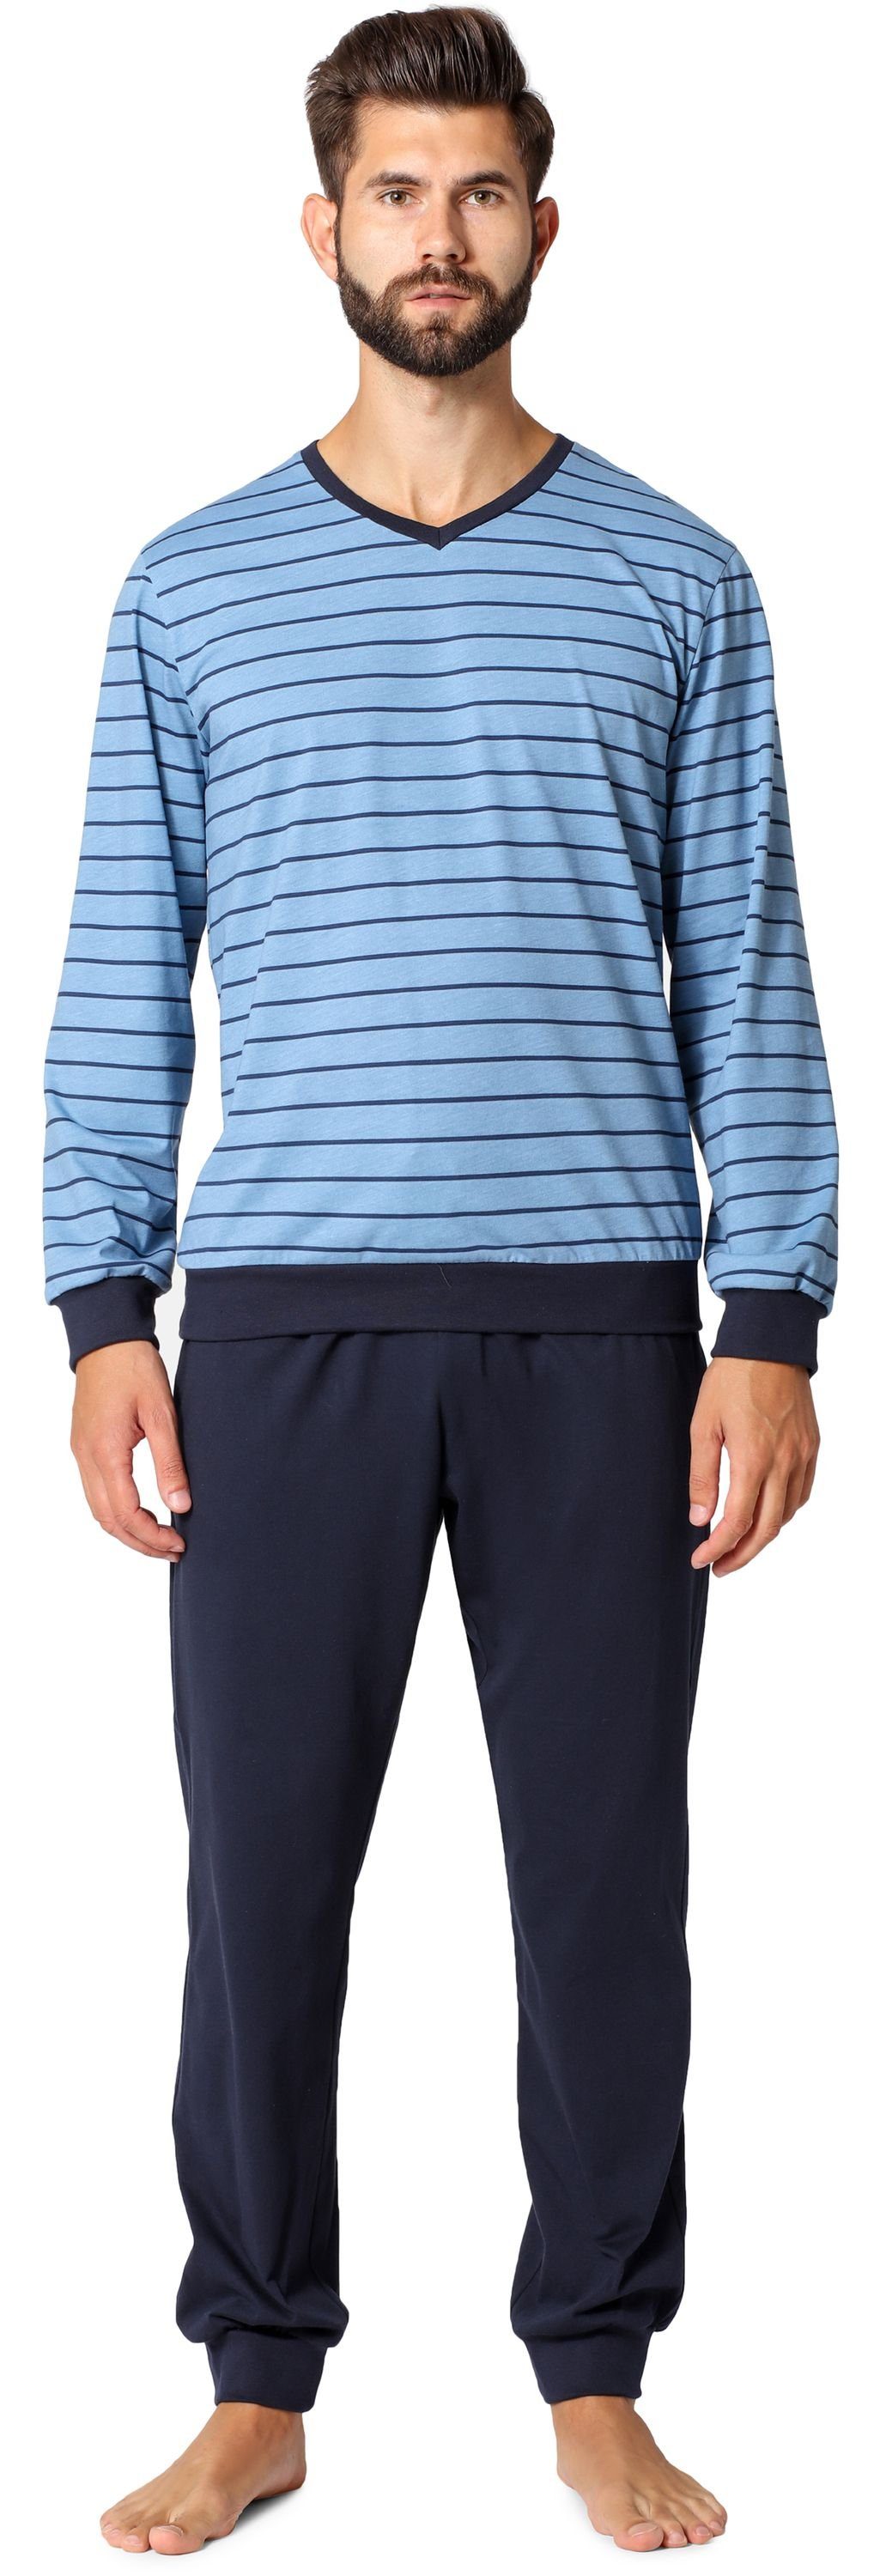 Ozean Marineblau Schlafanzug Baumwolle aus Herren LA40-220 Ladeheid Schlafanzug